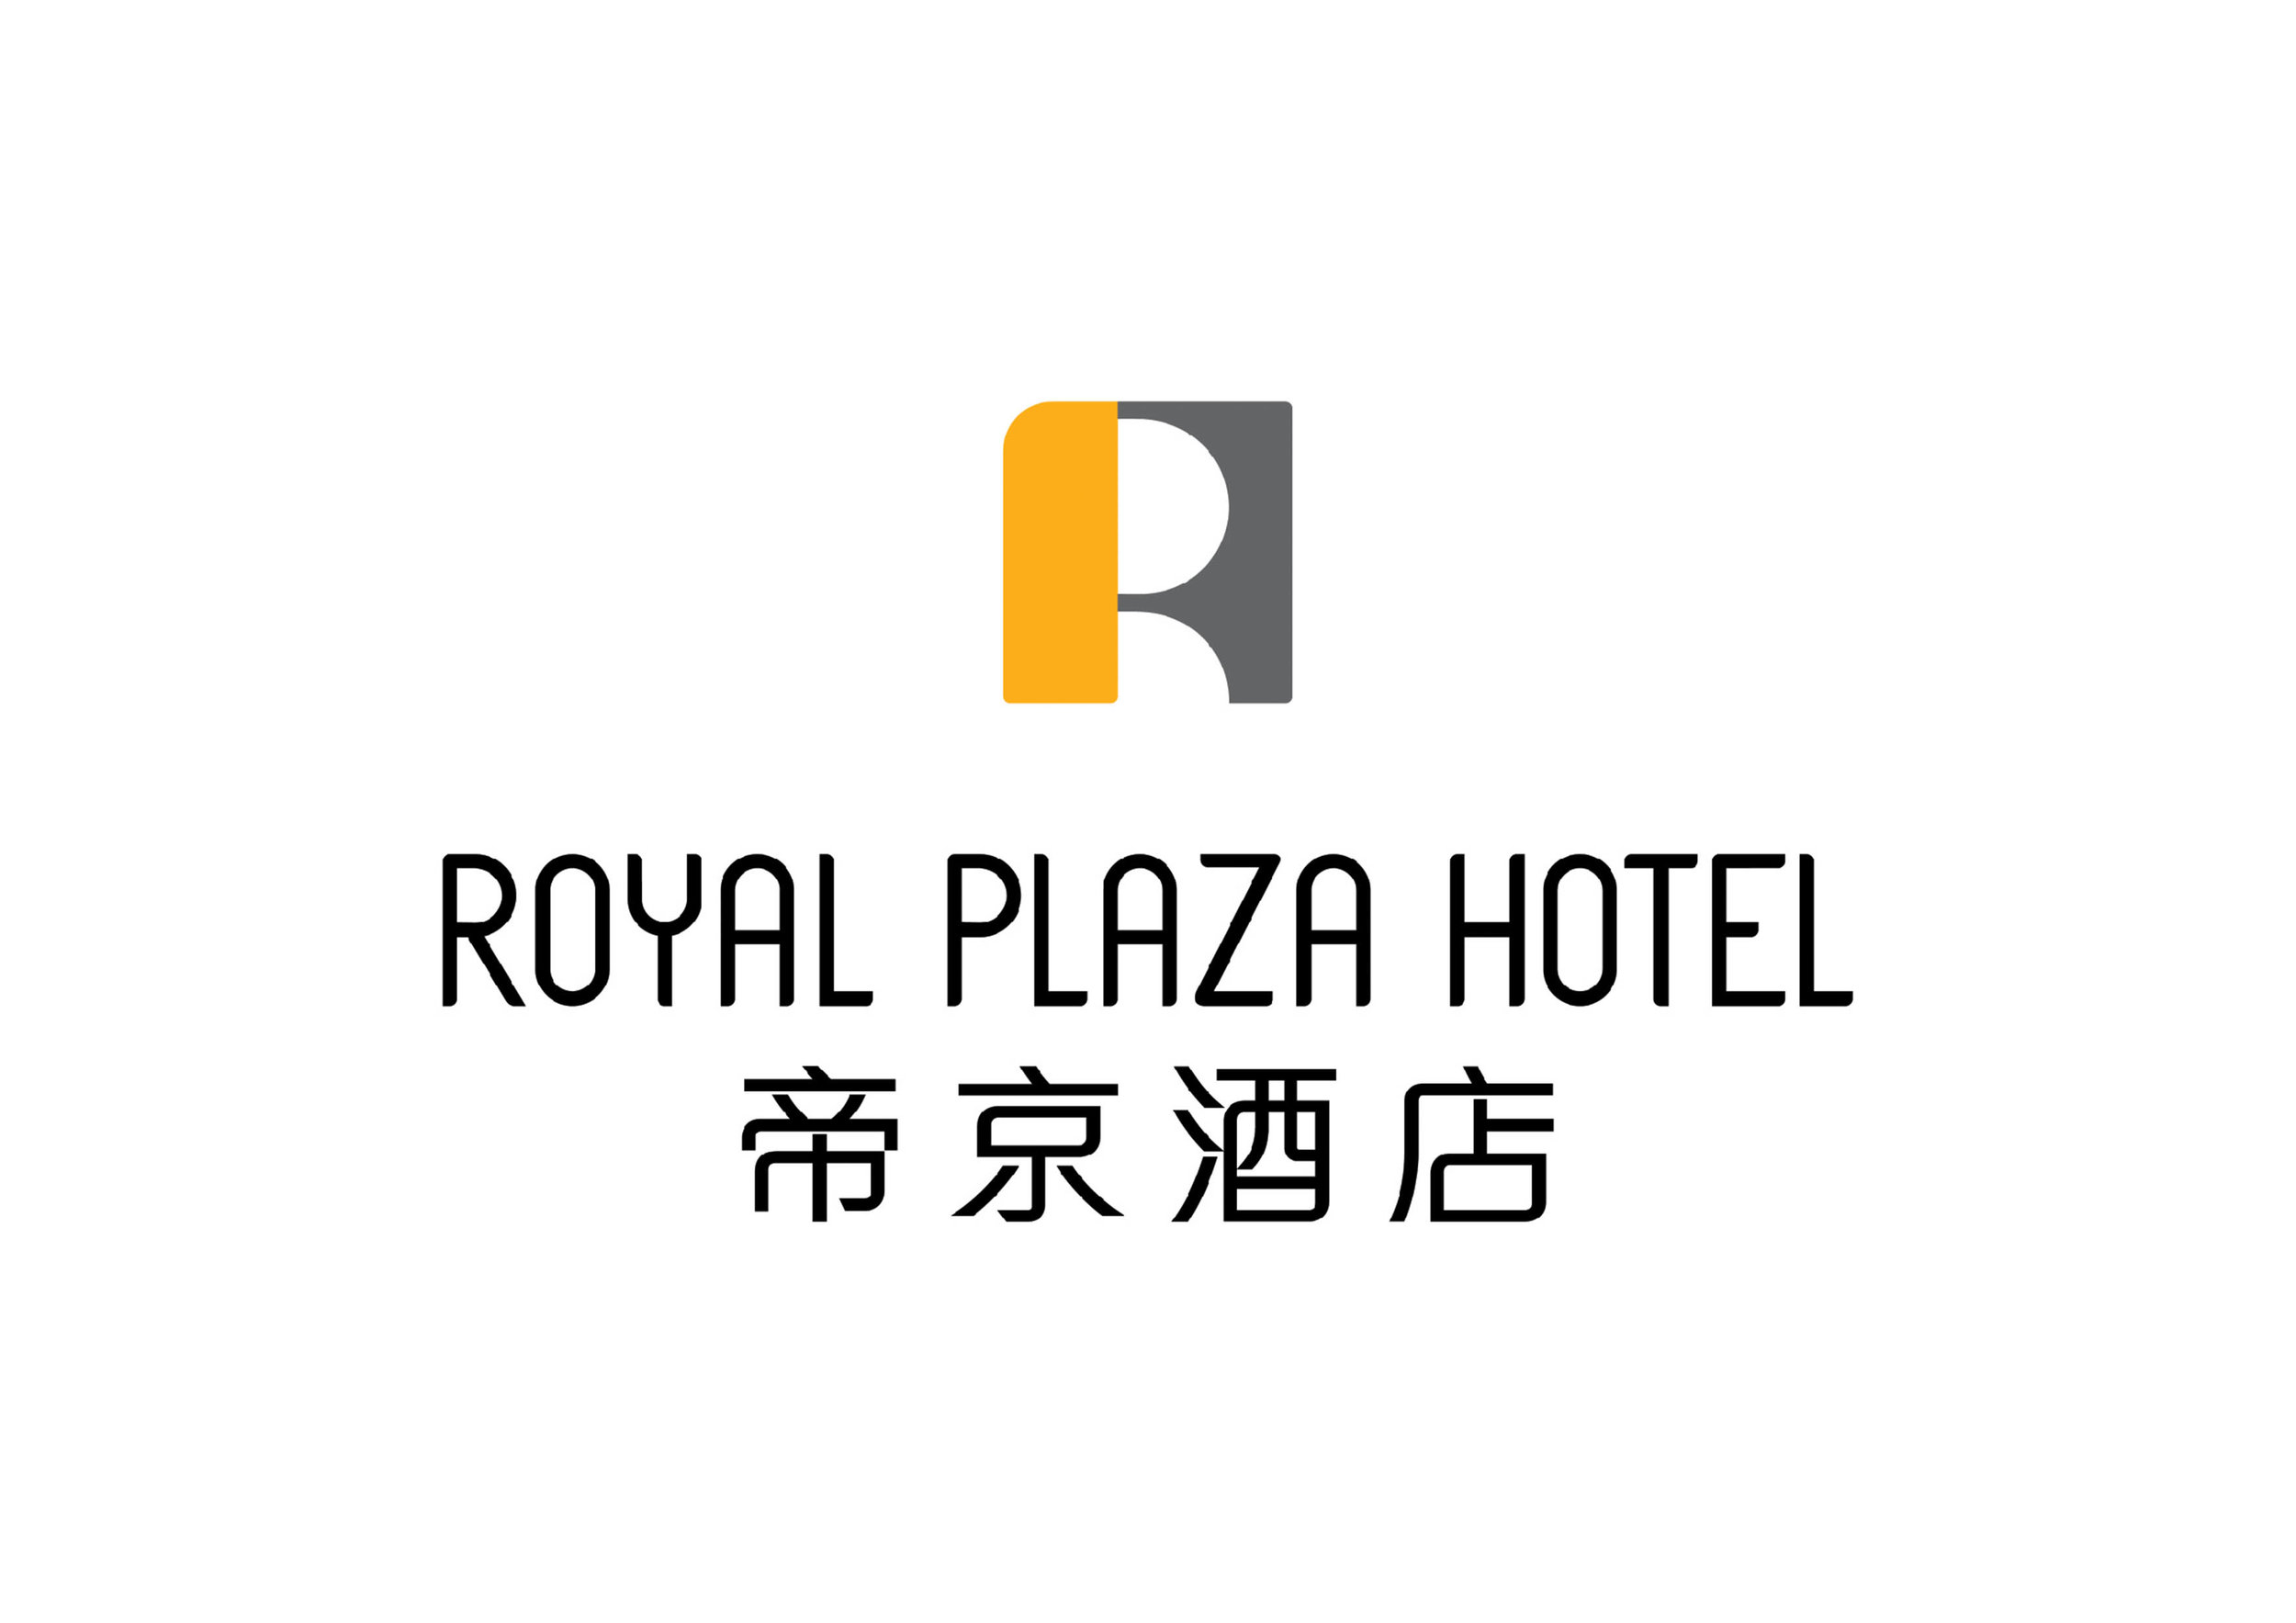 Royal Plaza Hotel.jpg